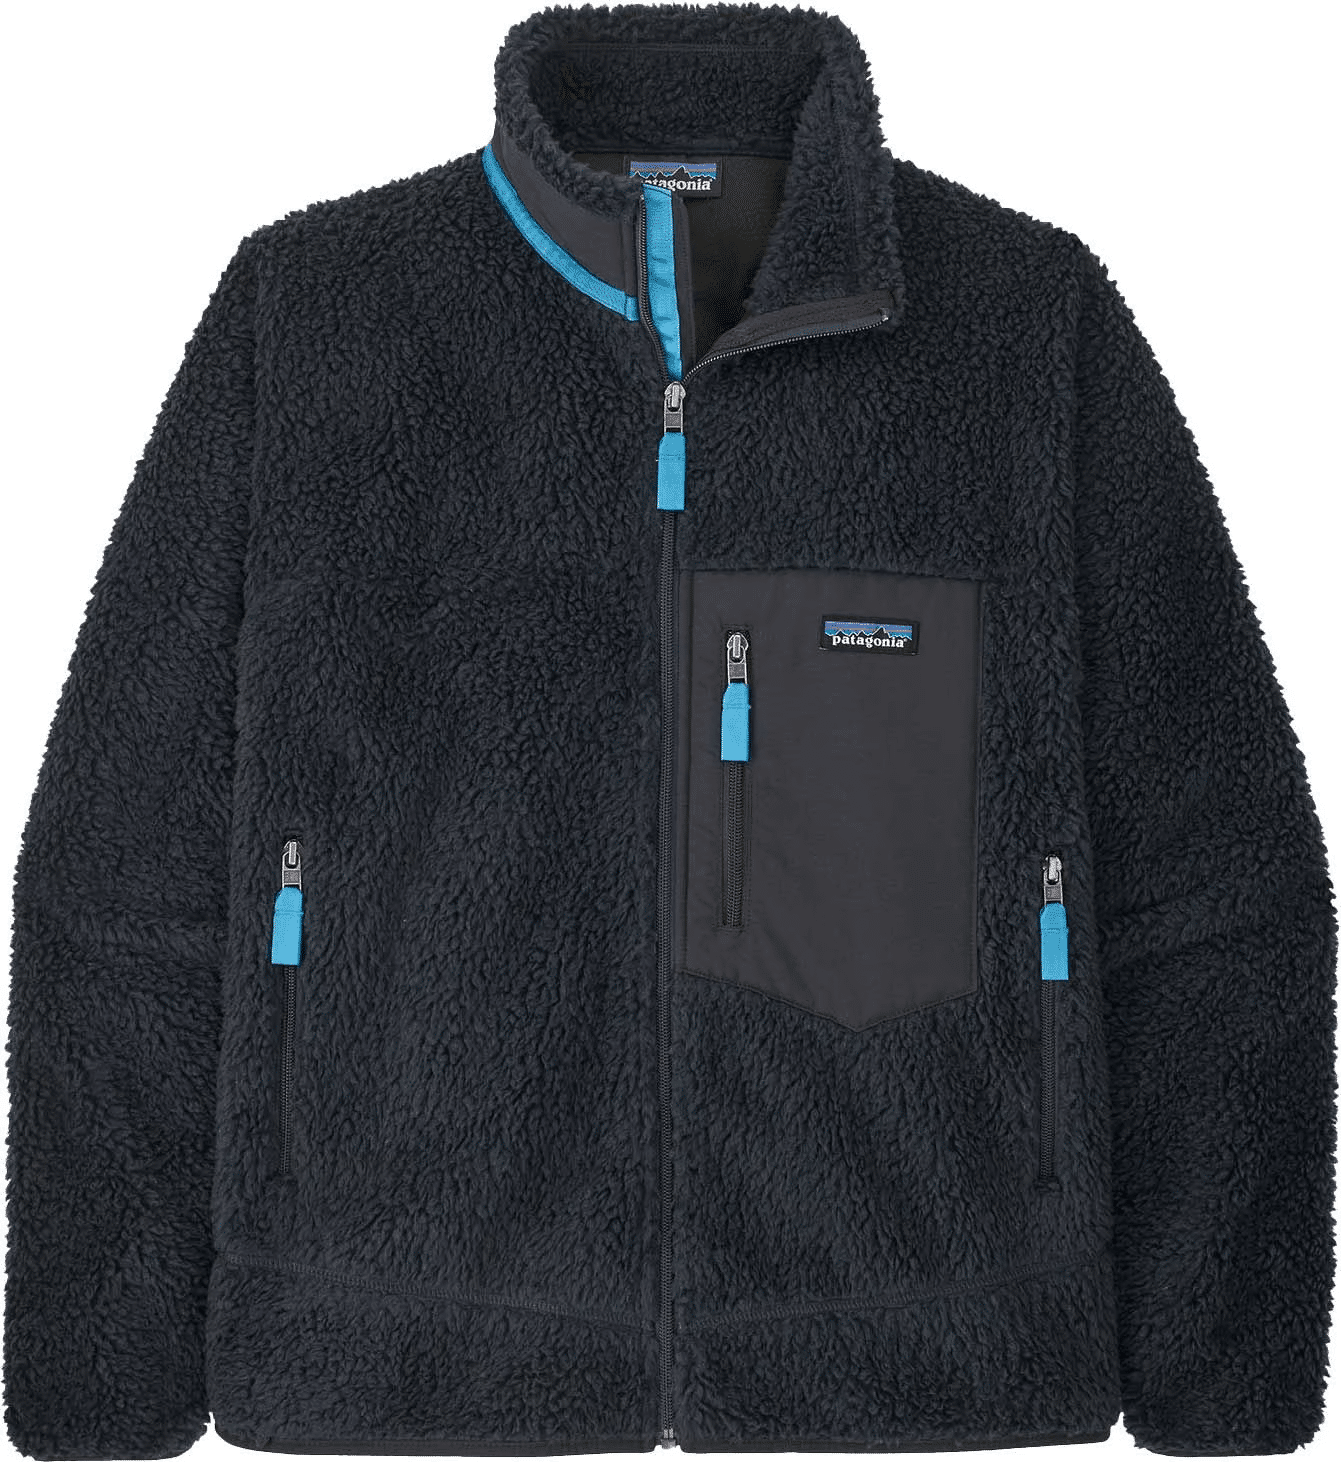 Patagonia - Classic Retro-X - Fleece jacket - Men's